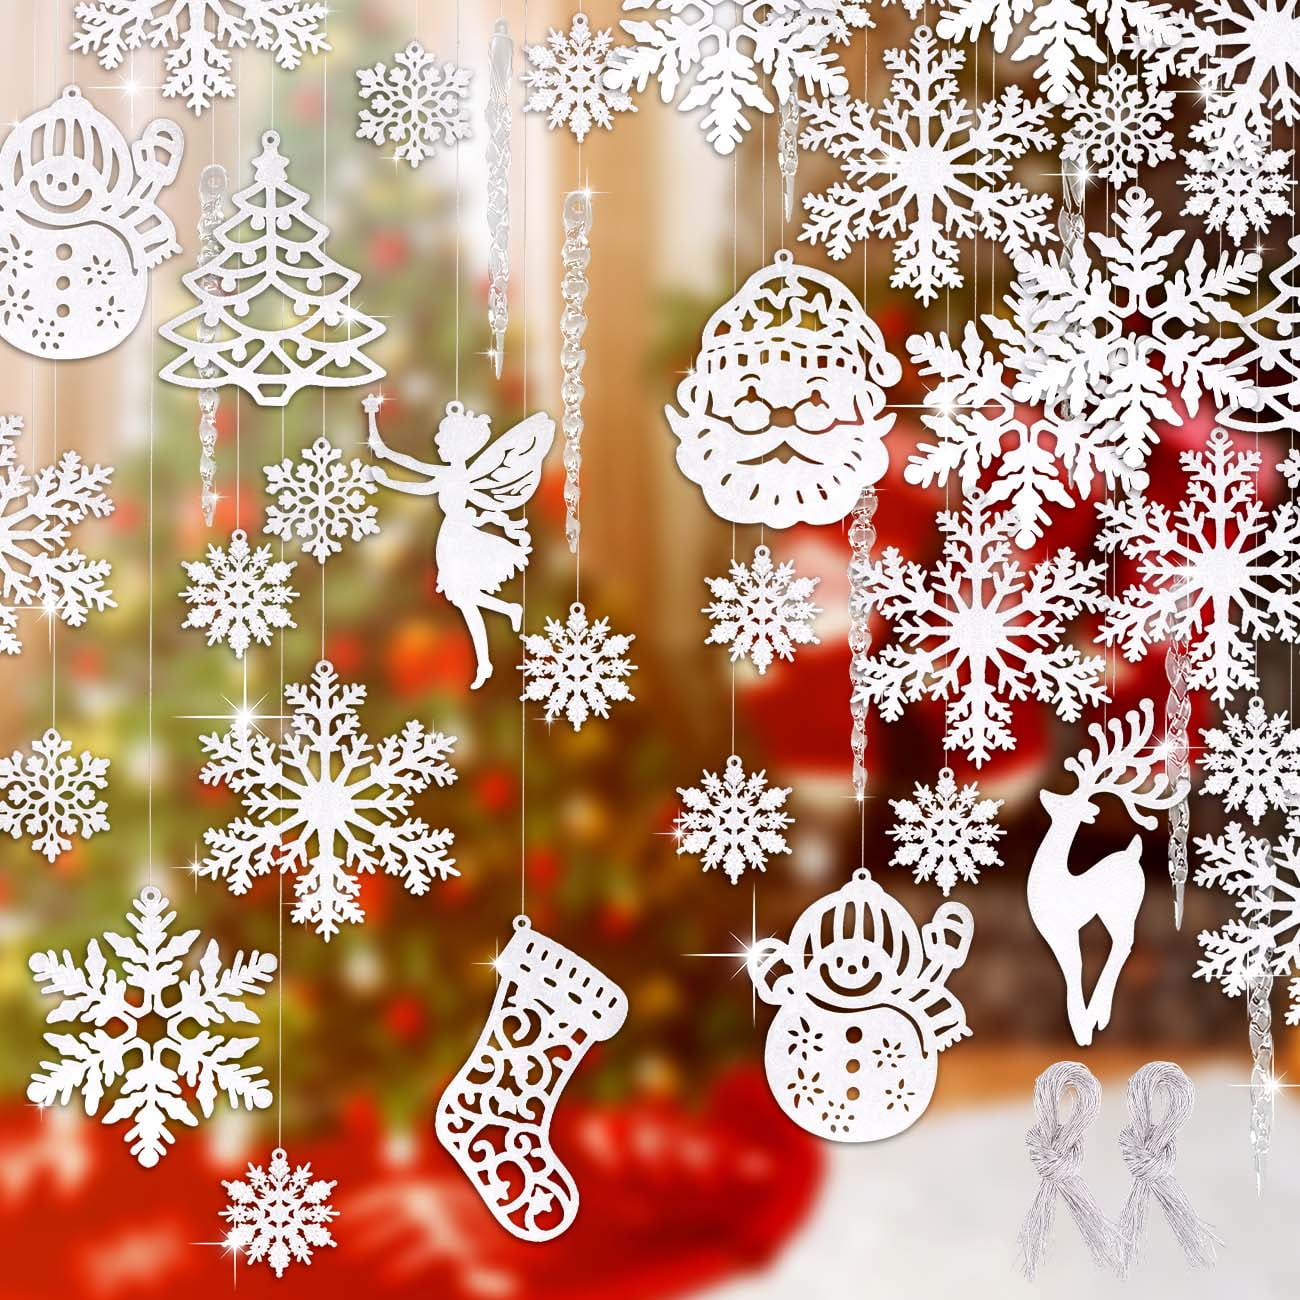 Ayieyill Christmas Tree Decoration Snowflake Ornaments - 46pcs White ...